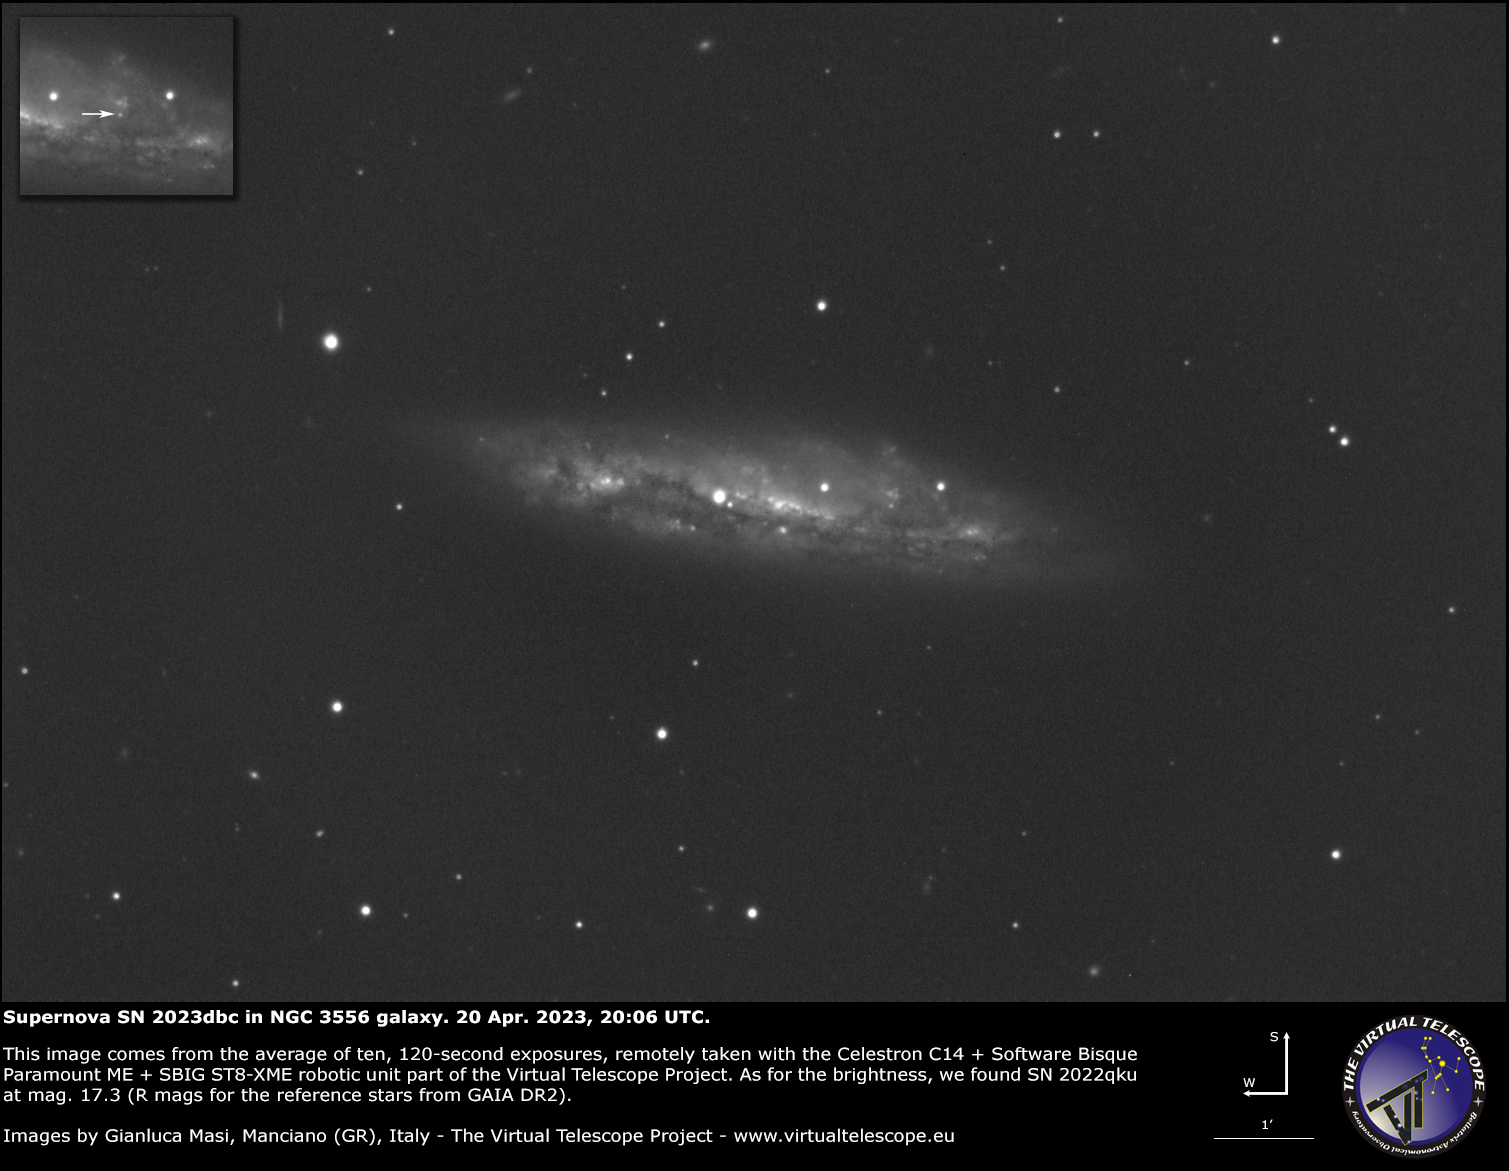 Supernova SN 2023dbc in Messier 108 galaxy: 15 Oct. 2022.